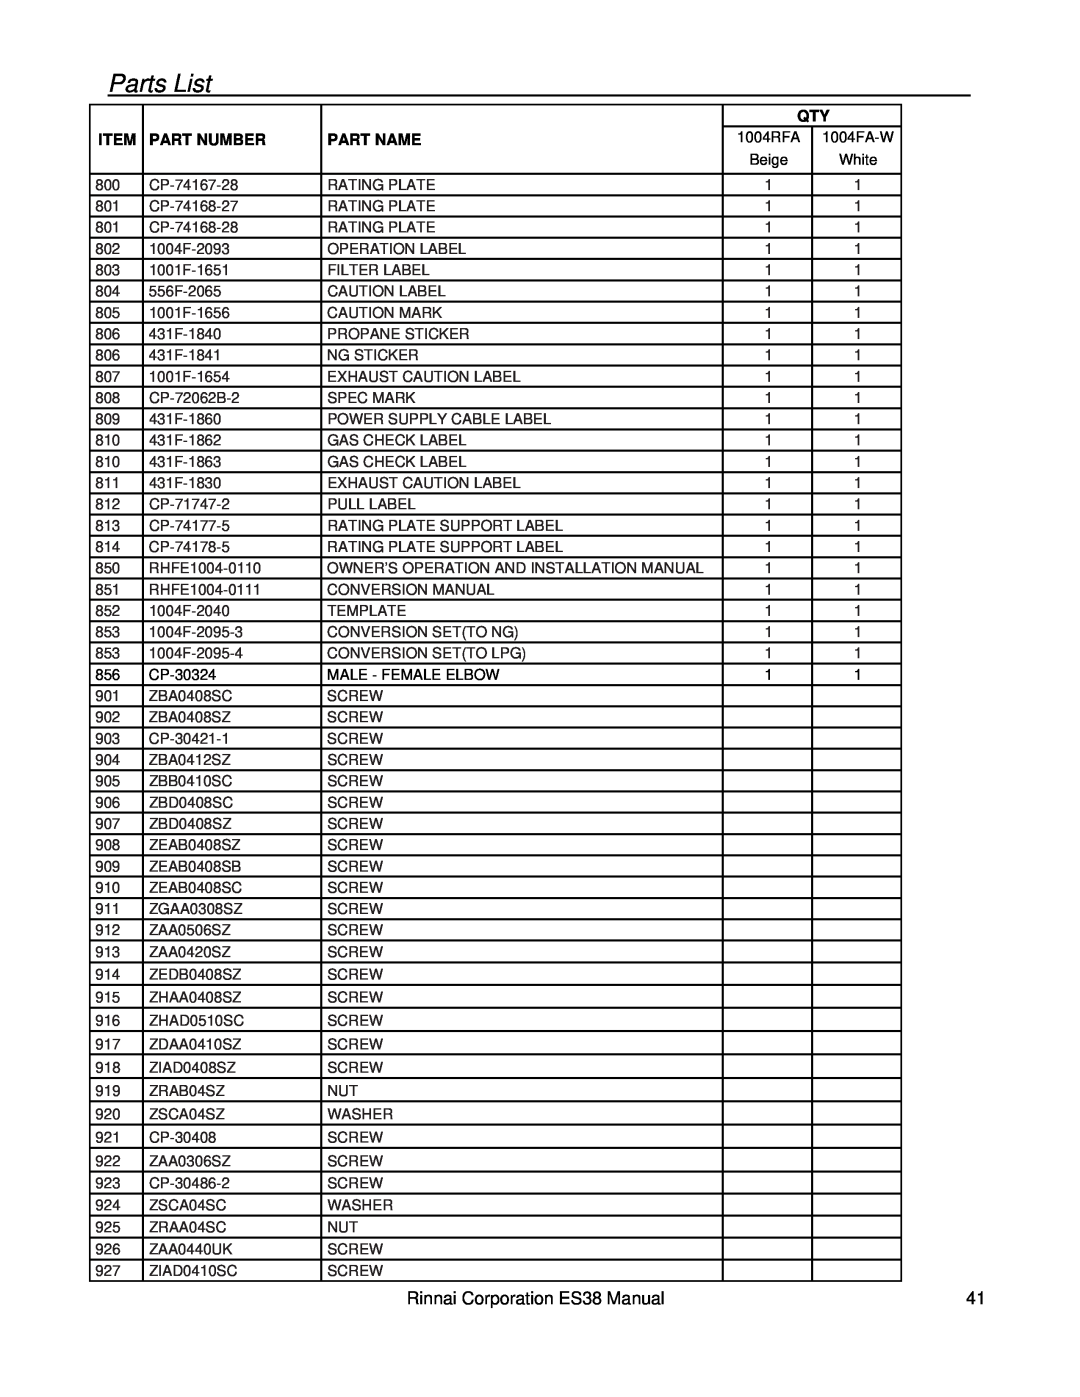 Rinnai installation manual Parts List, Rinnai Corporation ES38 Manual, Part Number, Part Name 